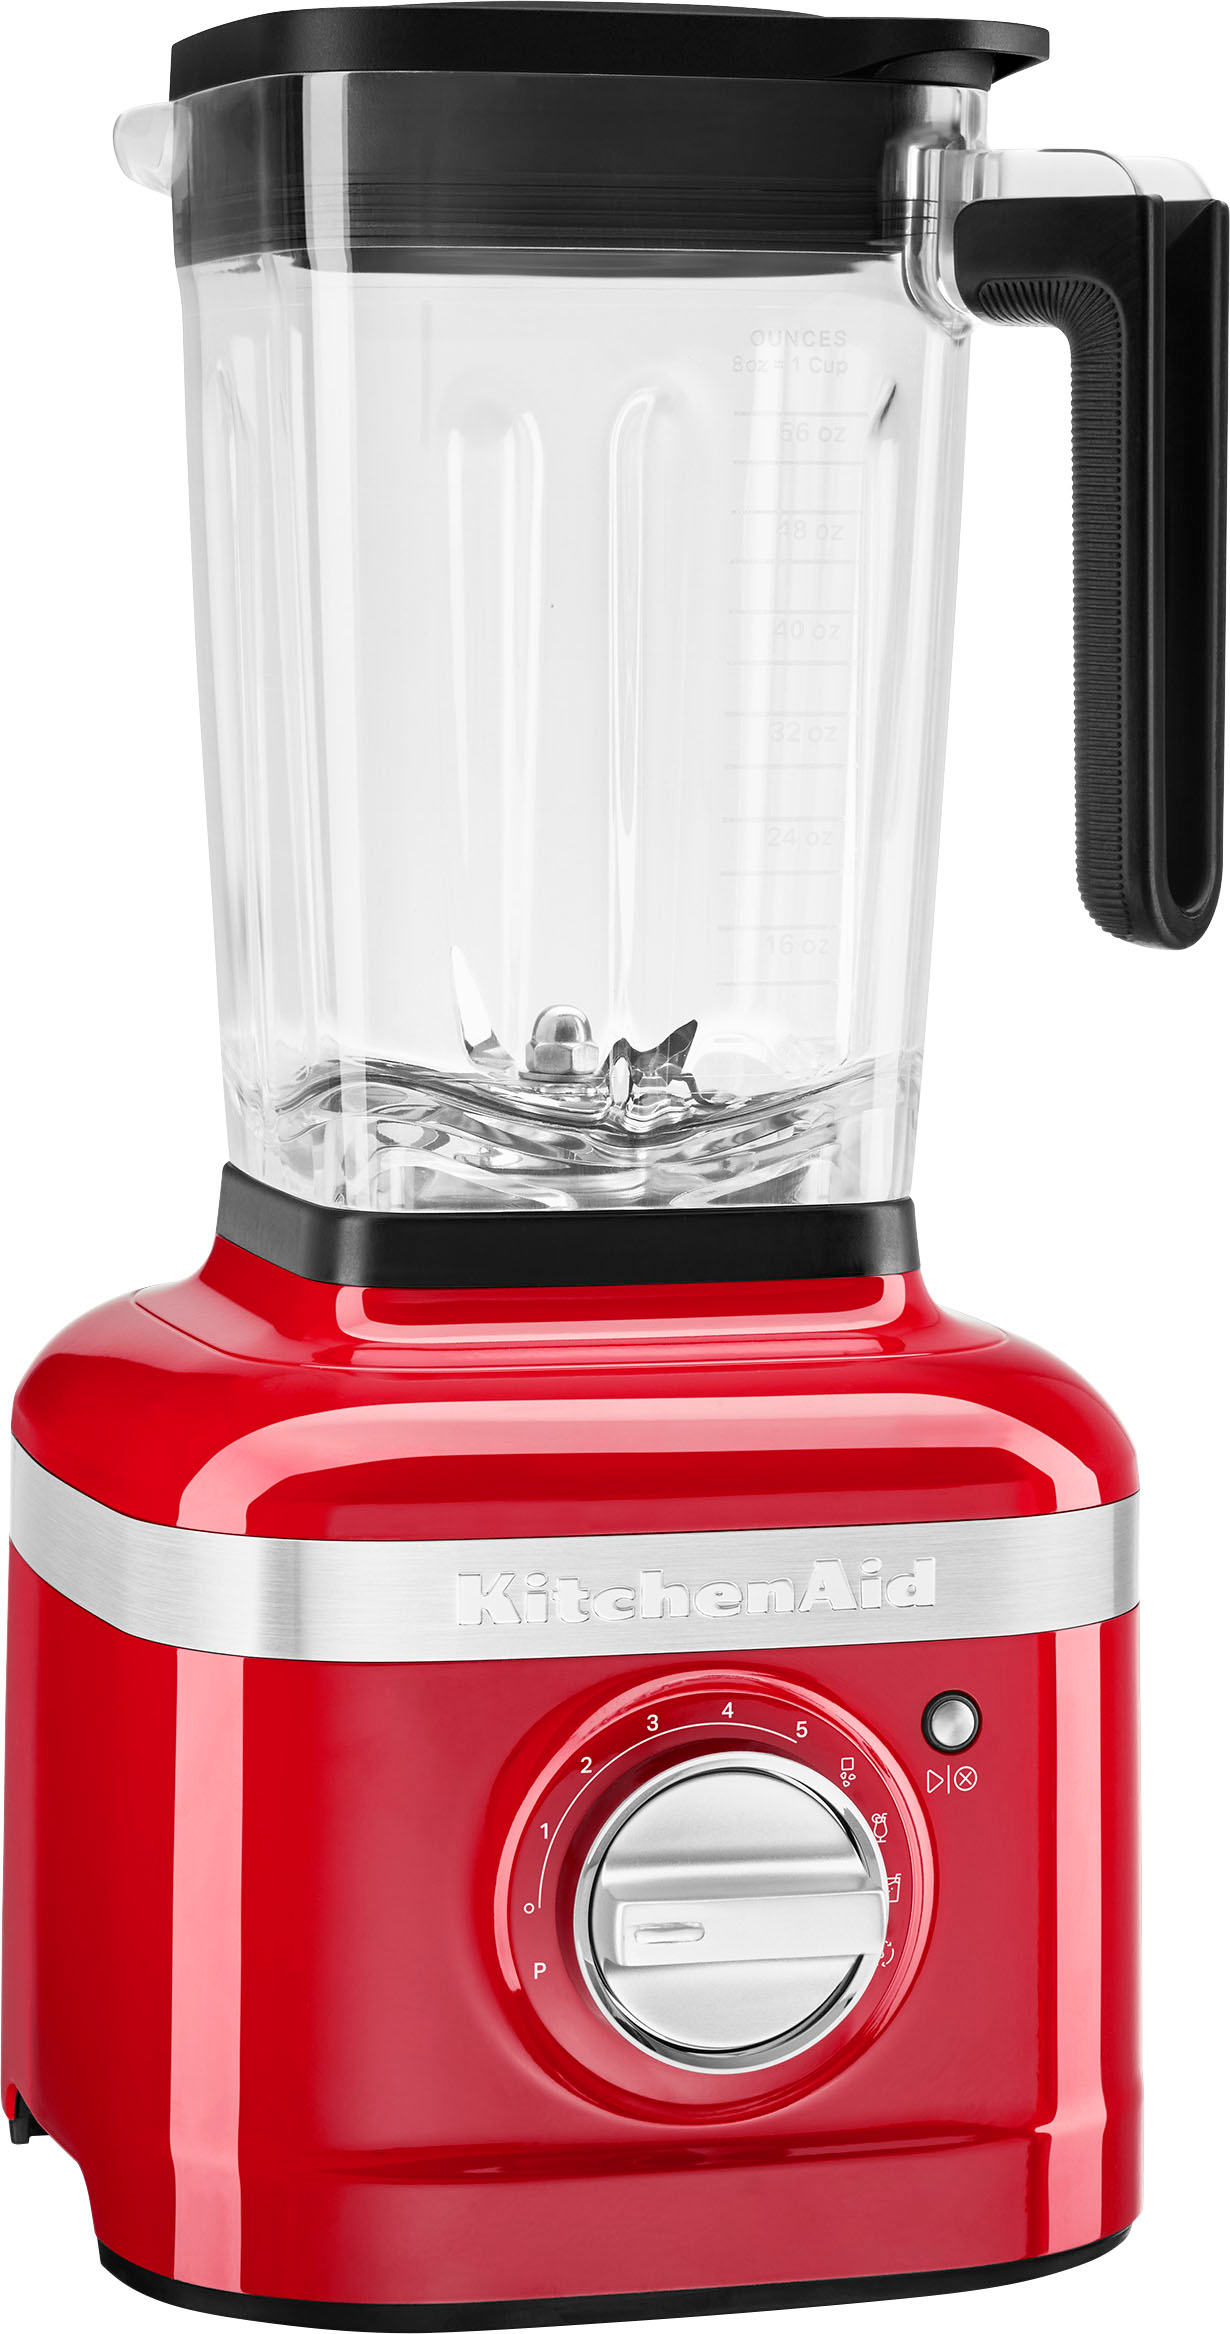 Kitchenaid K400 Blender With Glass Jar - Hearth & Hand™ With Magnolia -  Ksb4026tpp : Target